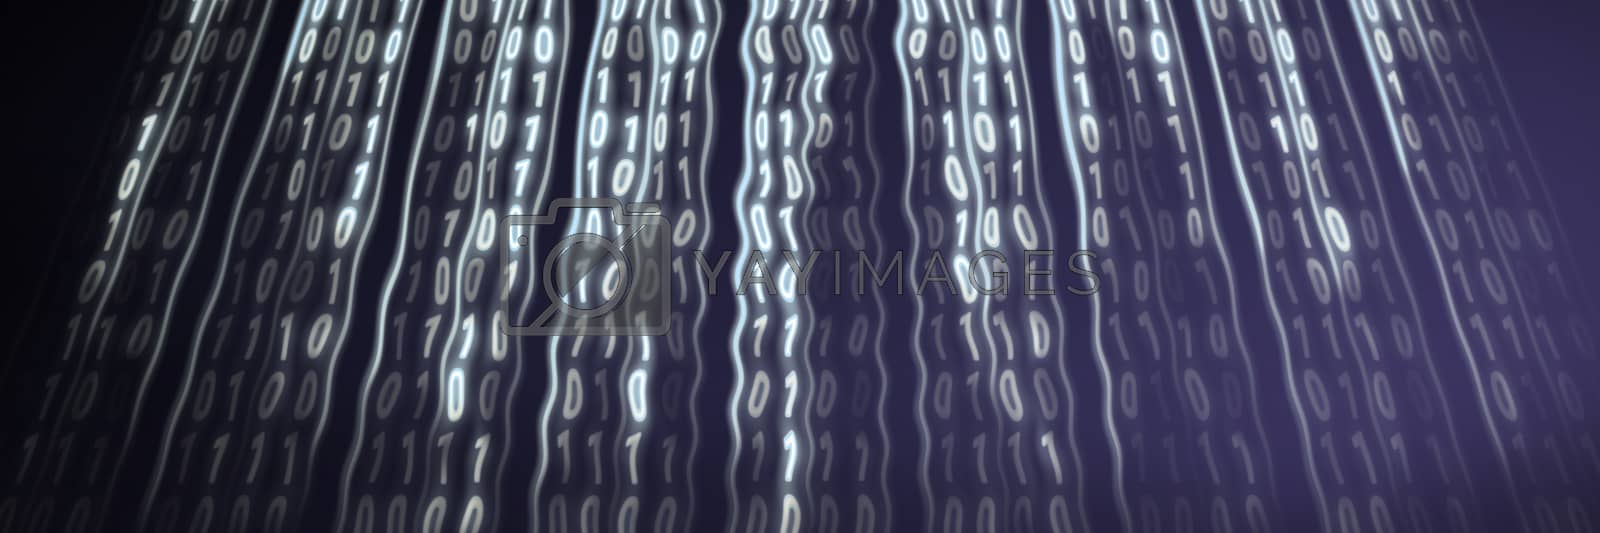 Royalty free image of Binary code by Wavebreakmedia